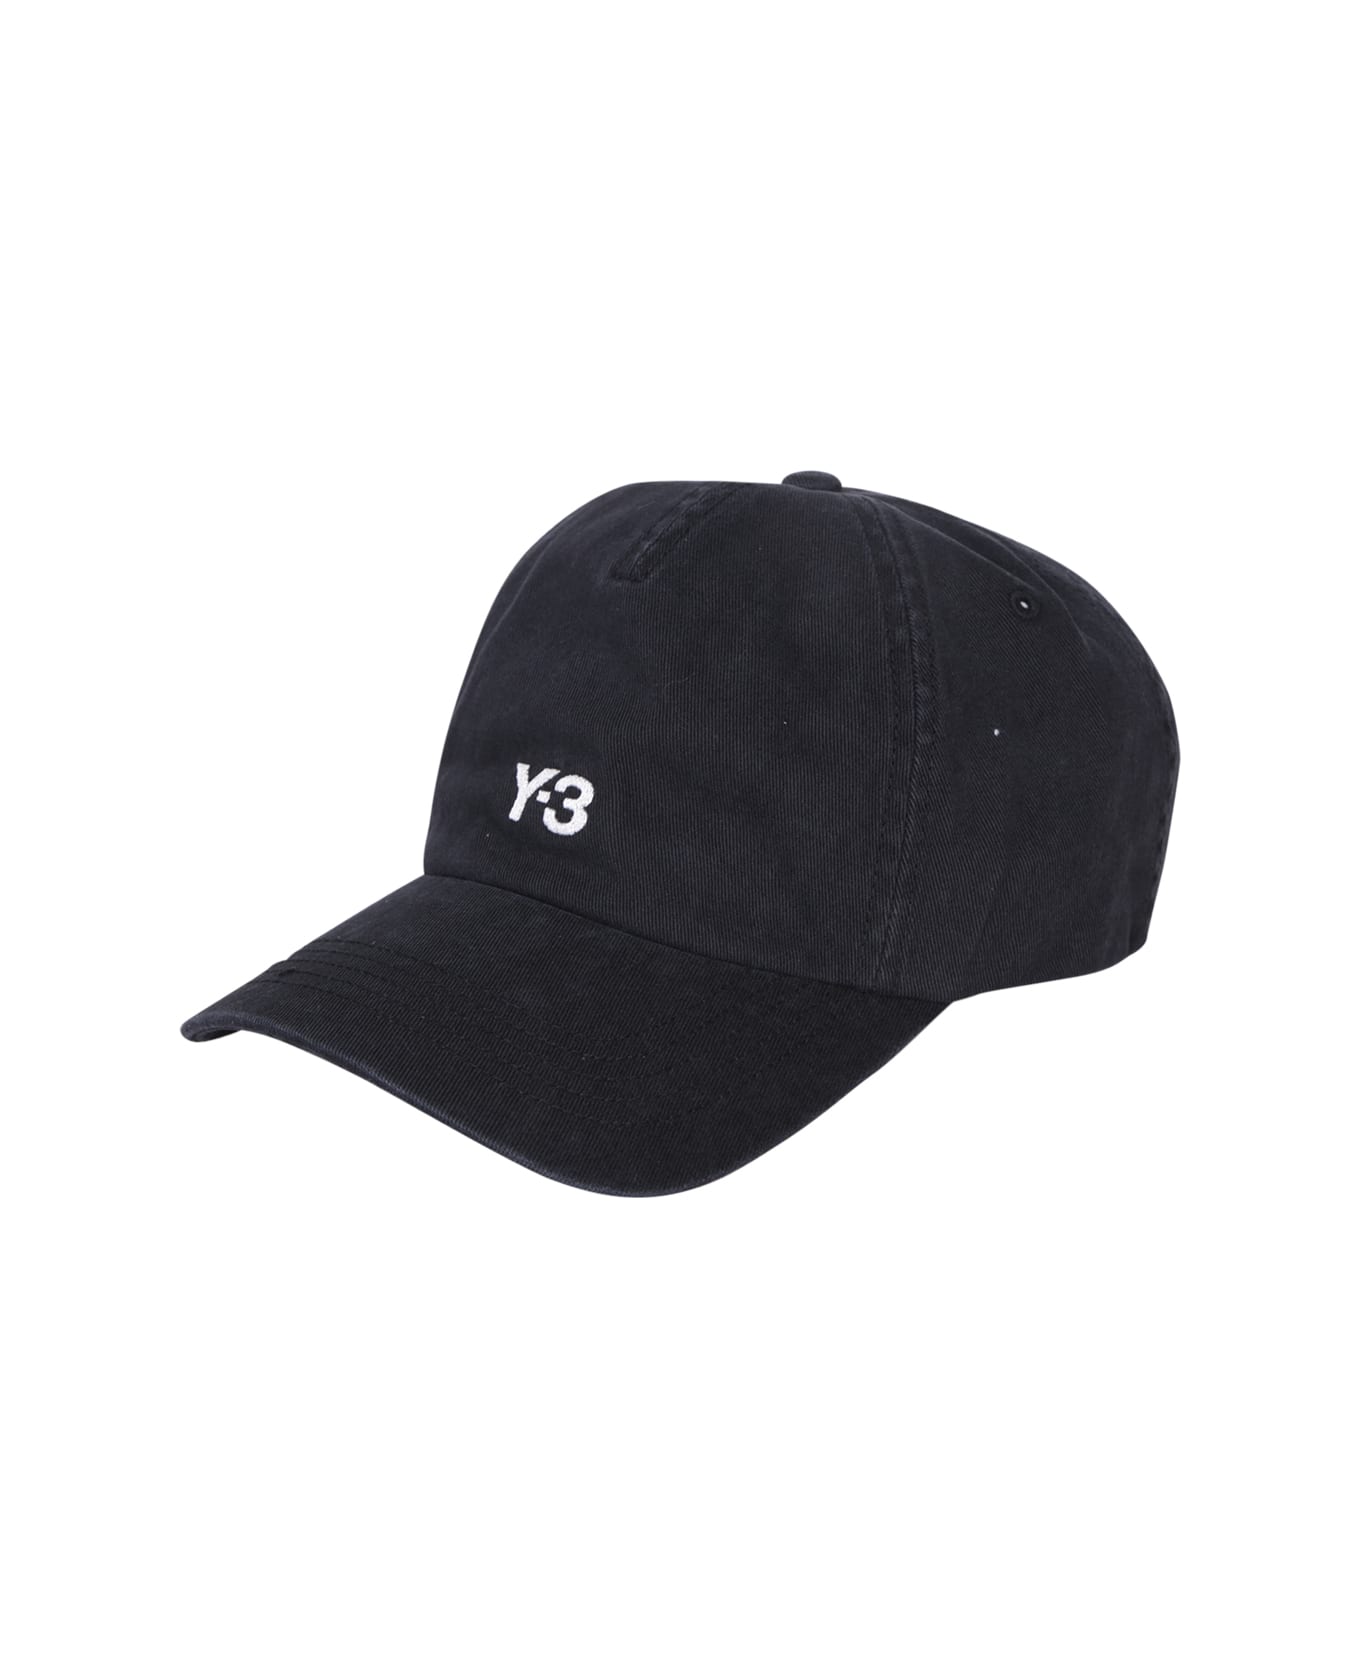 Y-3 Logo Embroidered Baseball Cap - Black